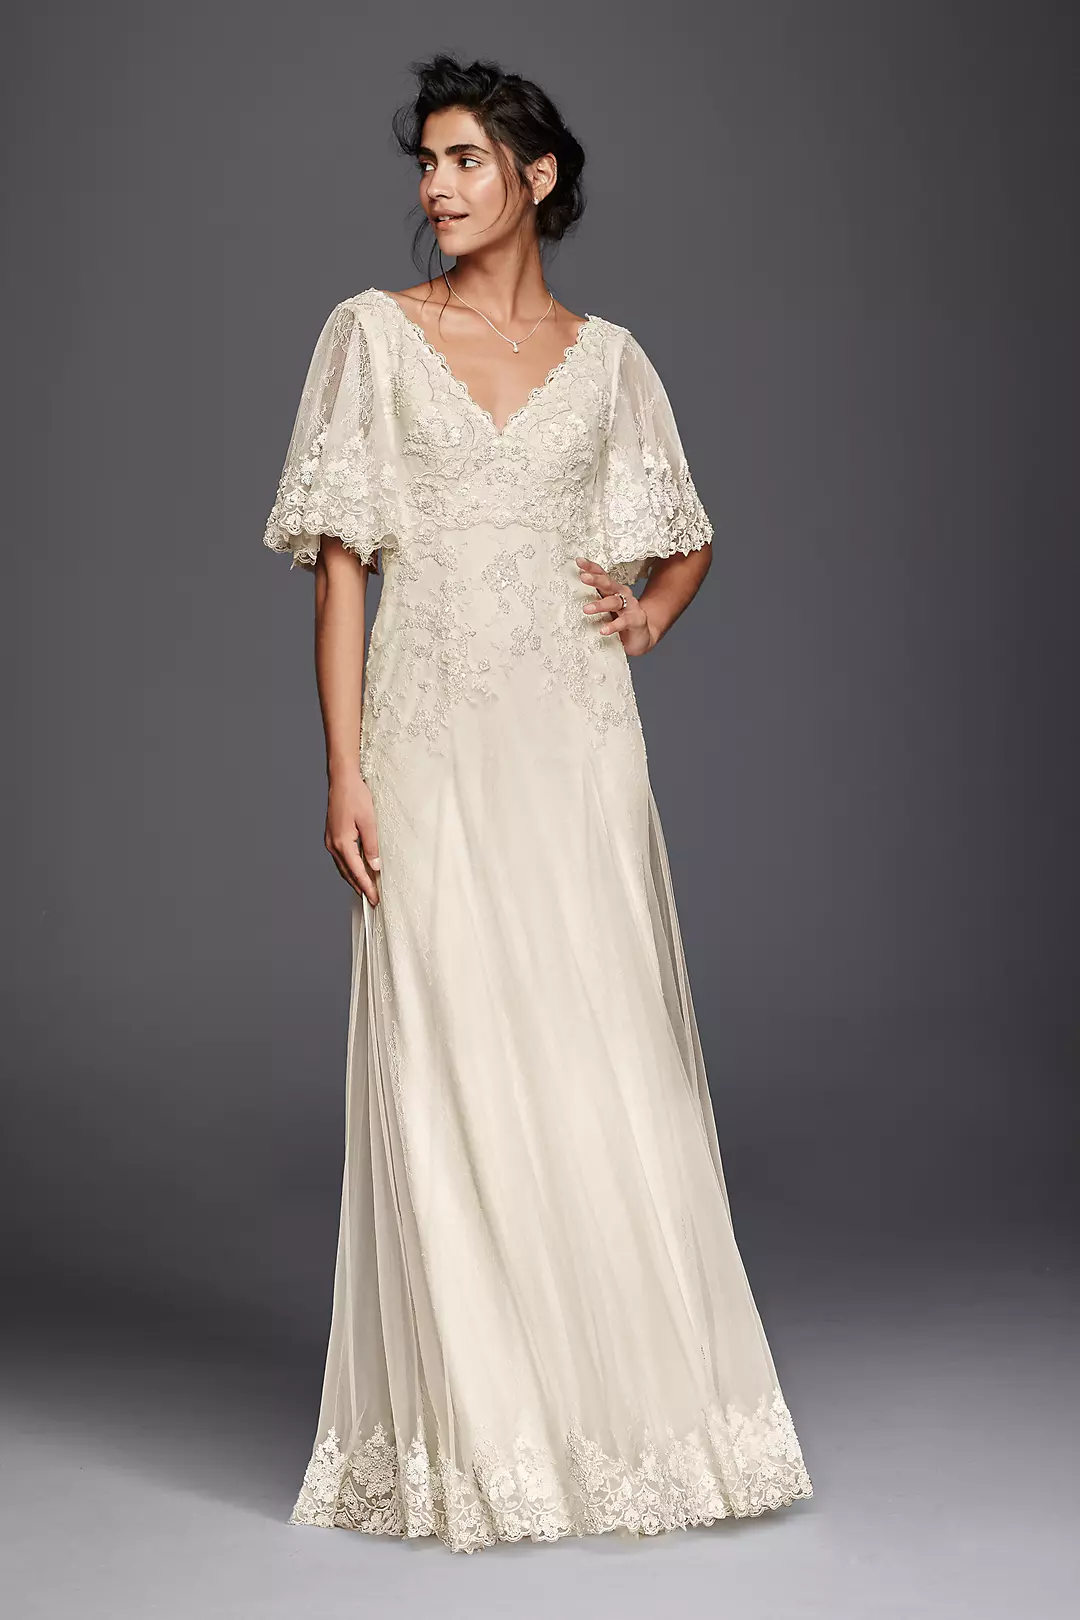 Melissa Sweet Wedding Dress with Flutter Sleeves Image